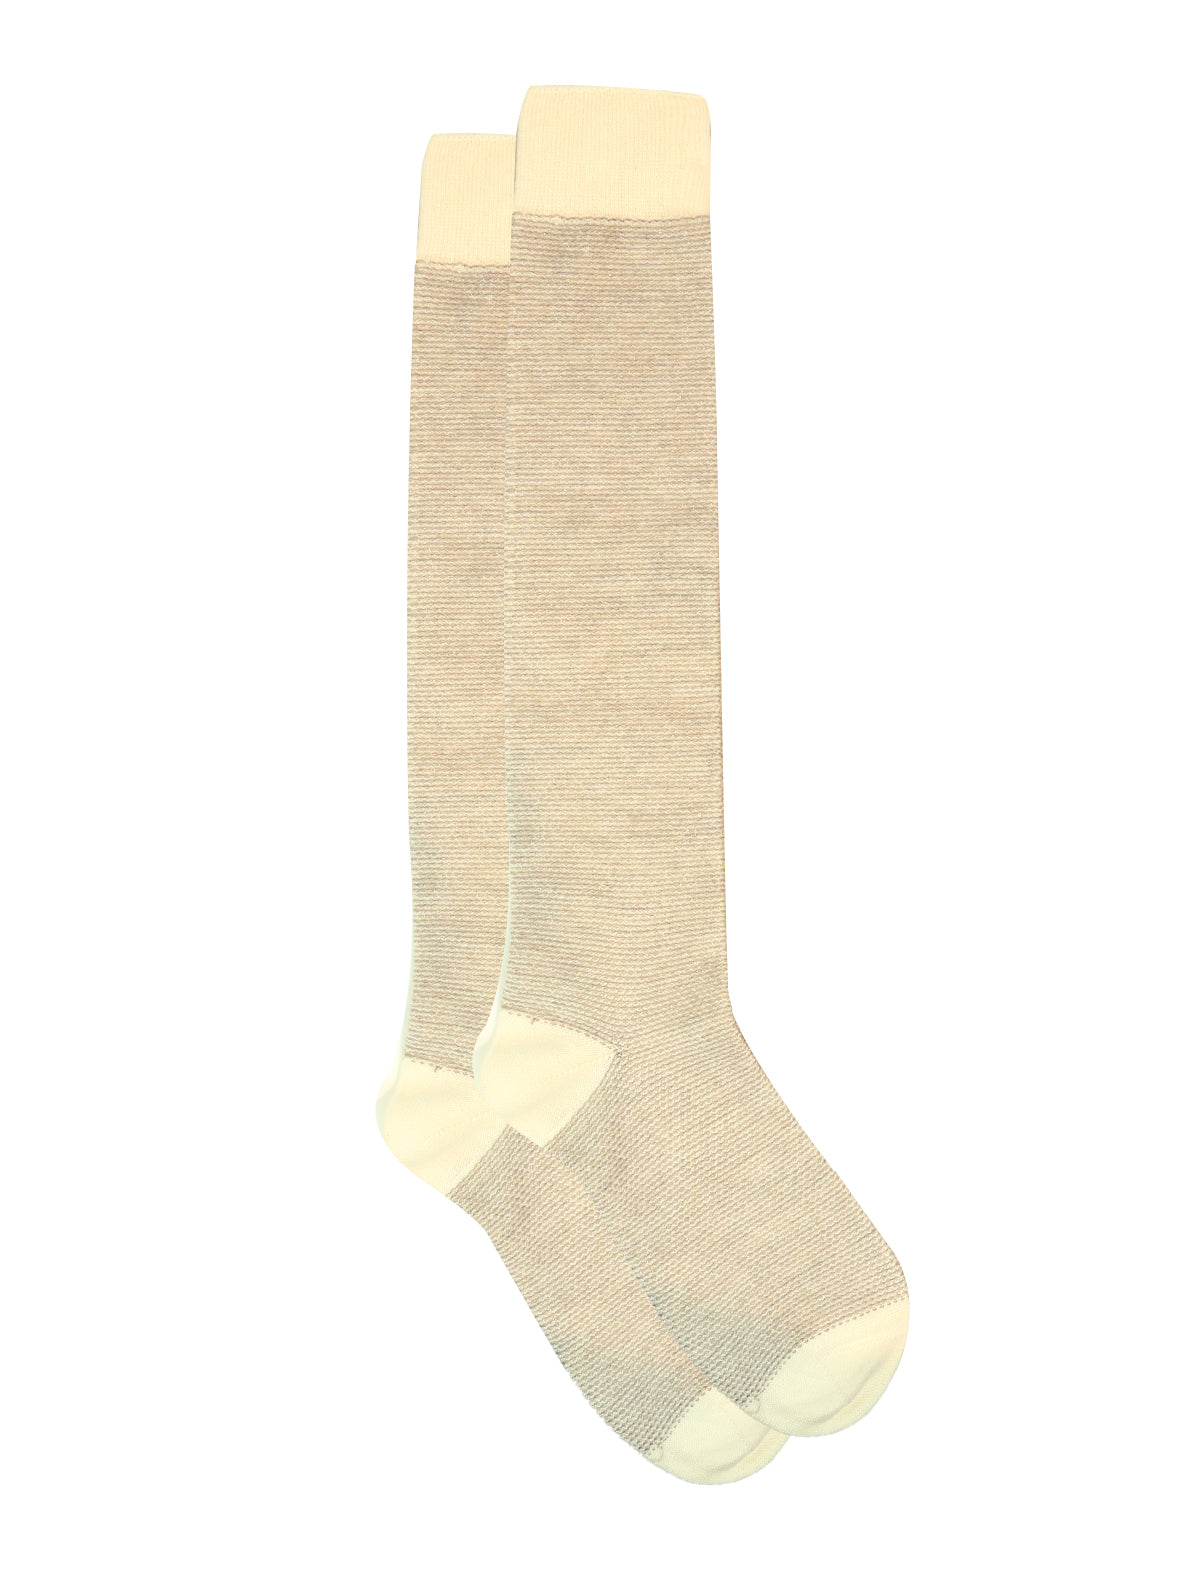 Gallo Long Socks in Cream w/ Studs